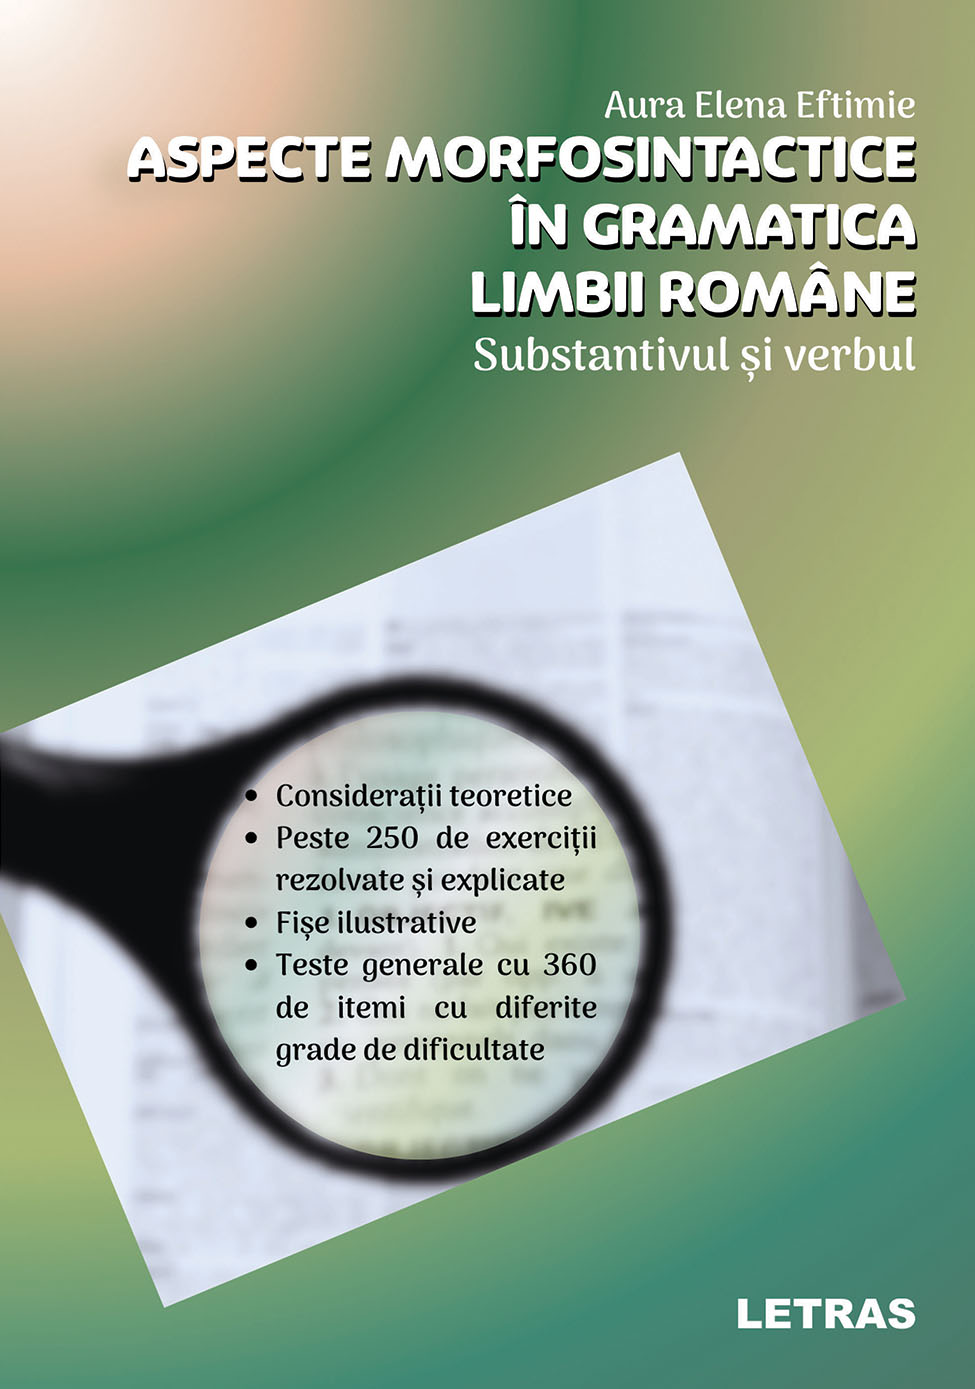 Aspecte morfosintactice in gramatica lb romane__Coperta1